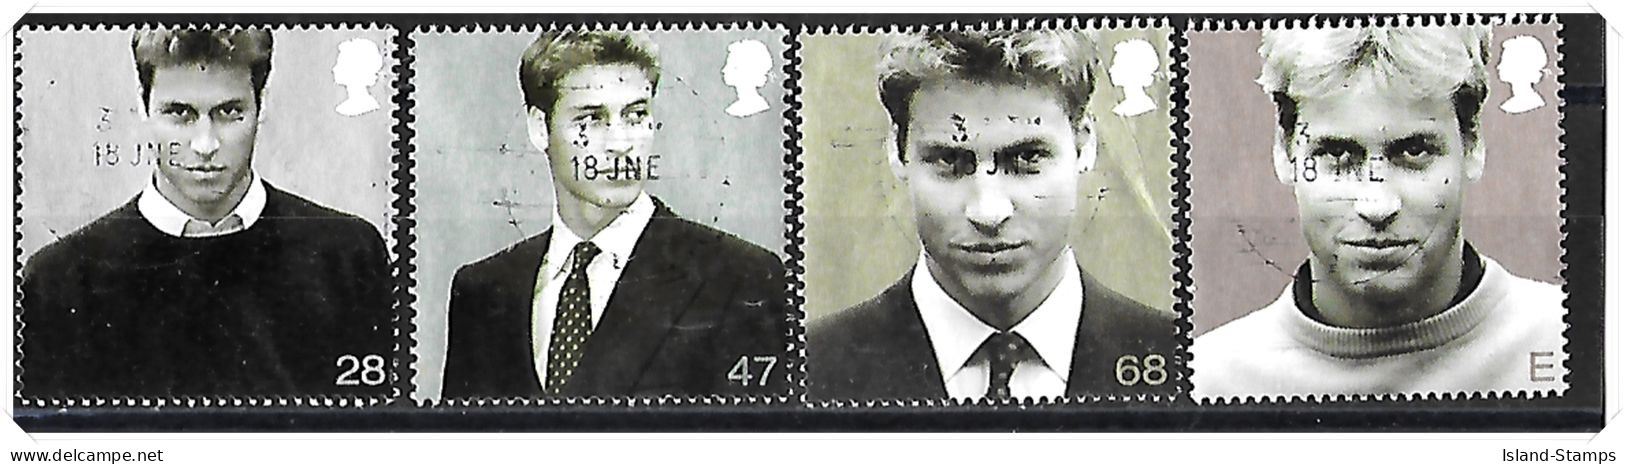 2003 Prince William's 21st Birthday Used Set HRD2-C - Used Stamps